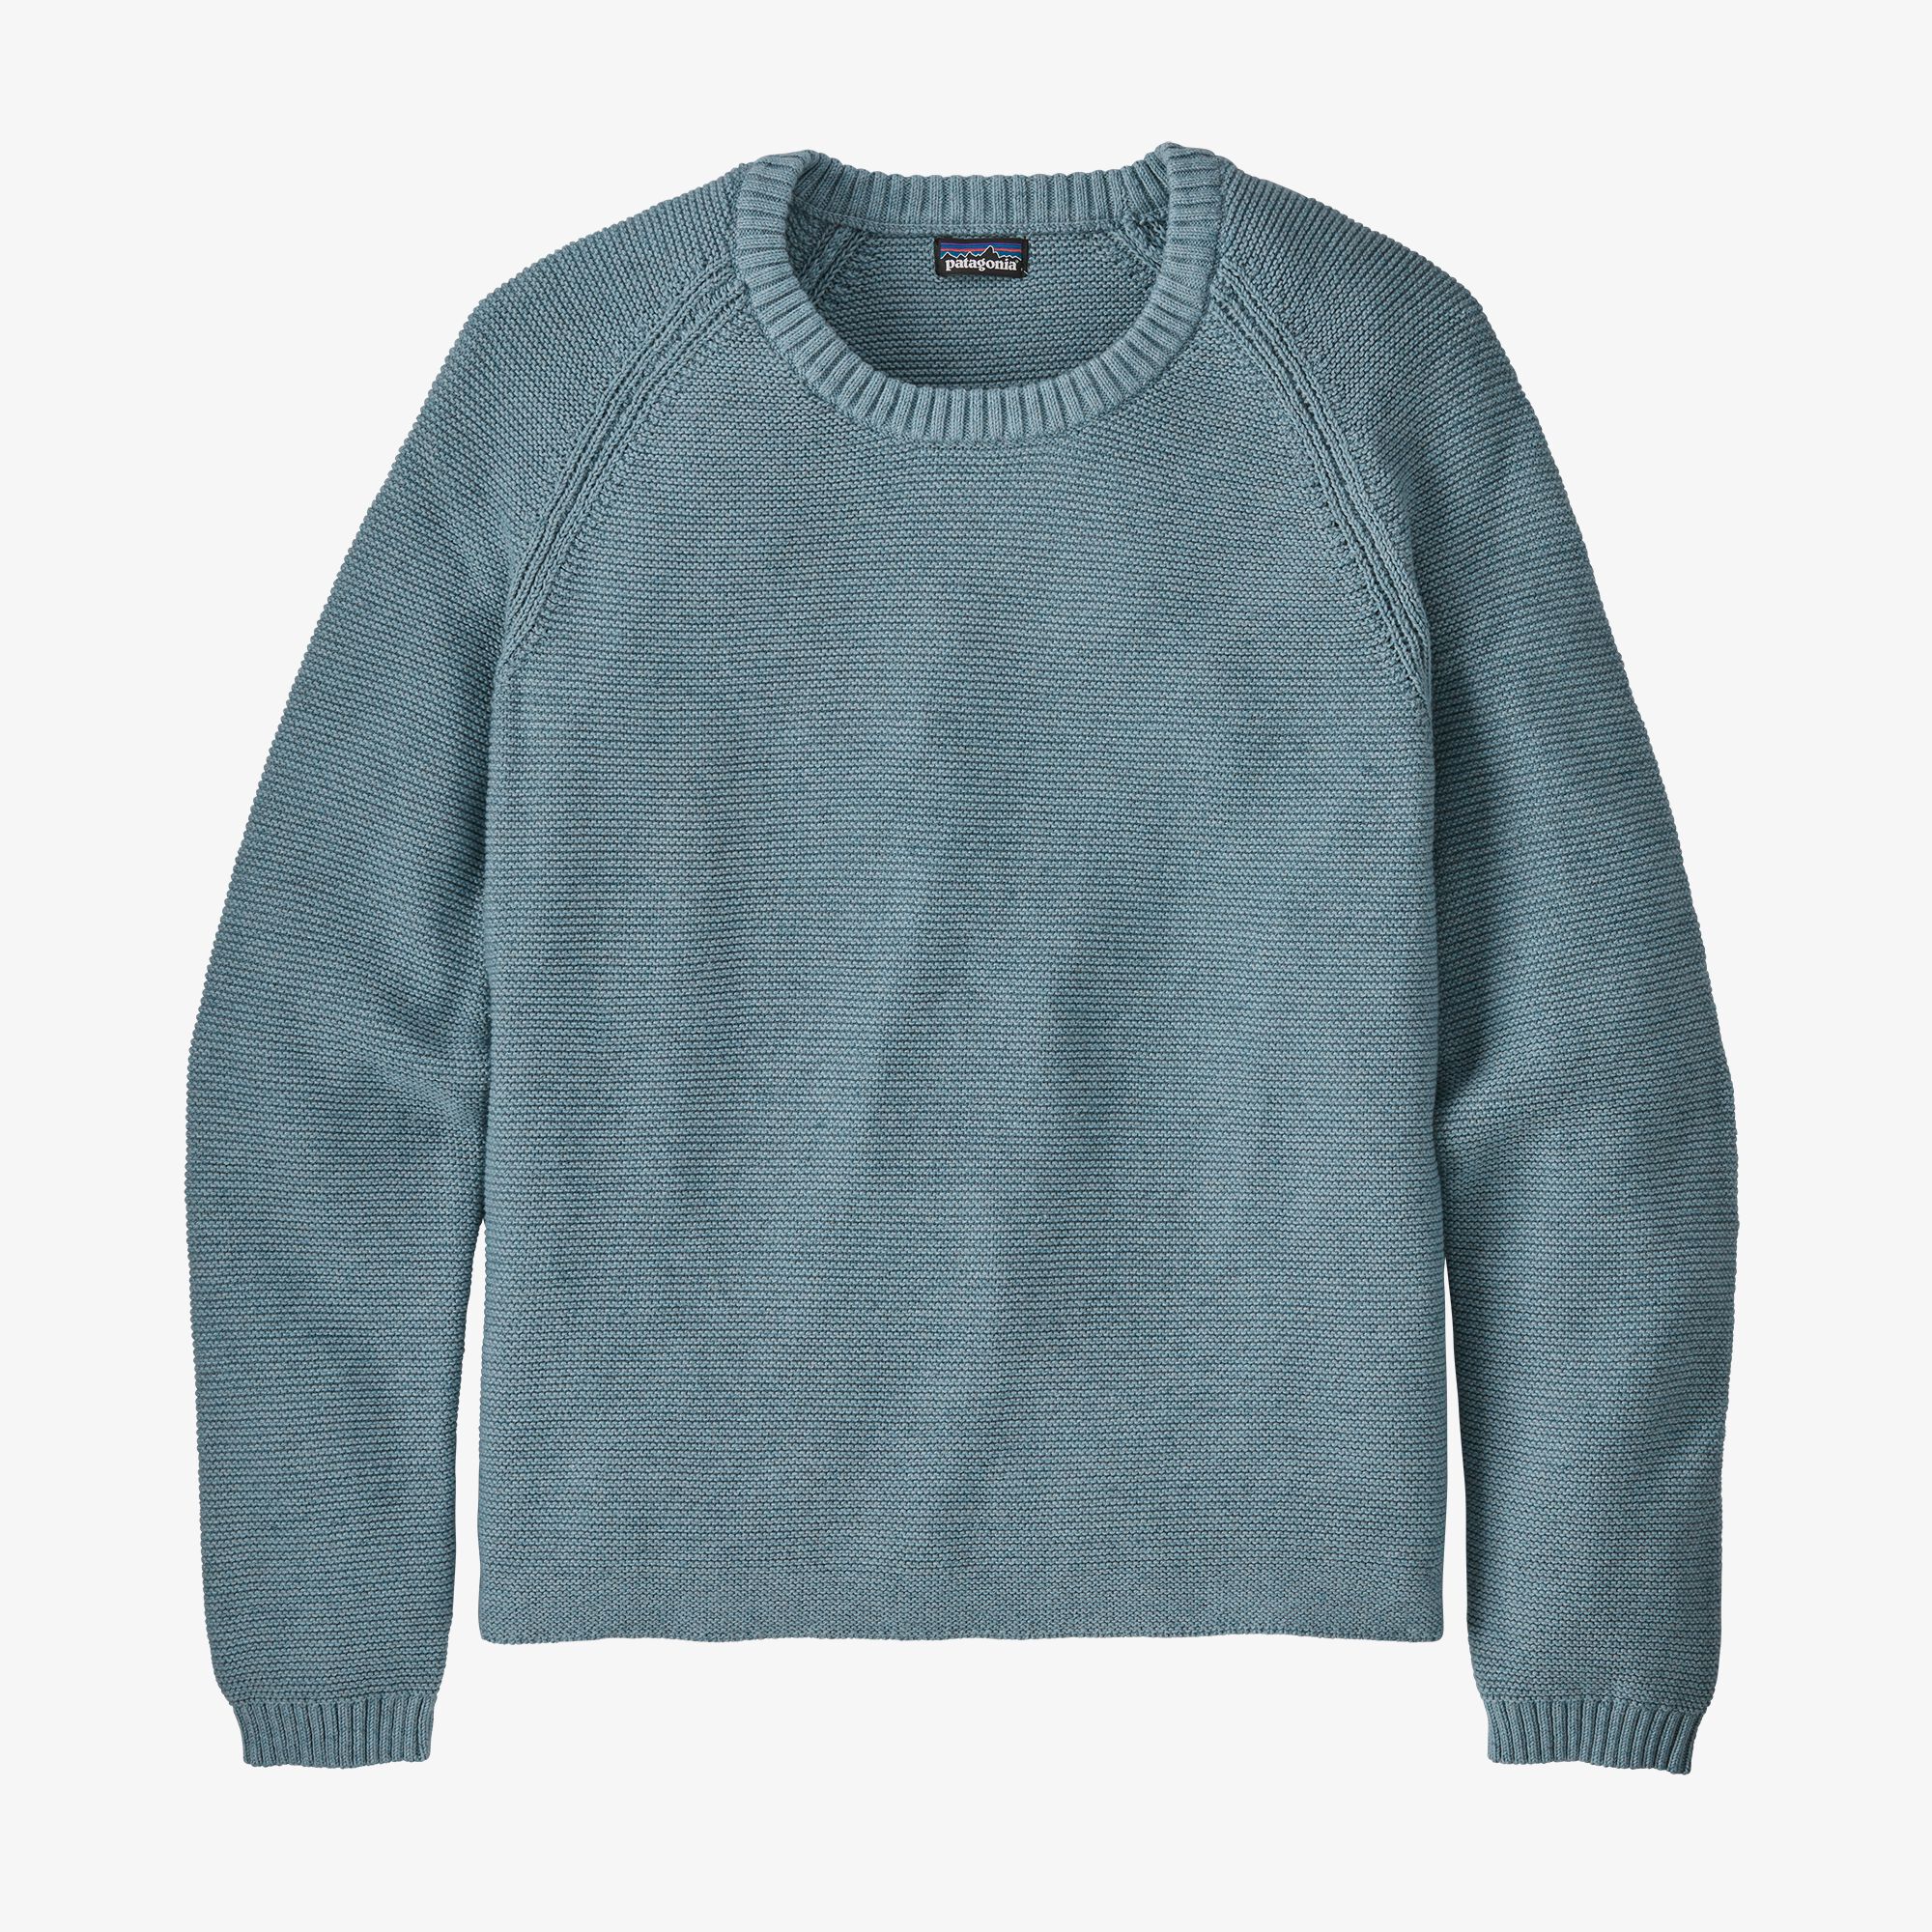 Patagonia Women's Long-Sleeved Organic Cotton Spring Sweater